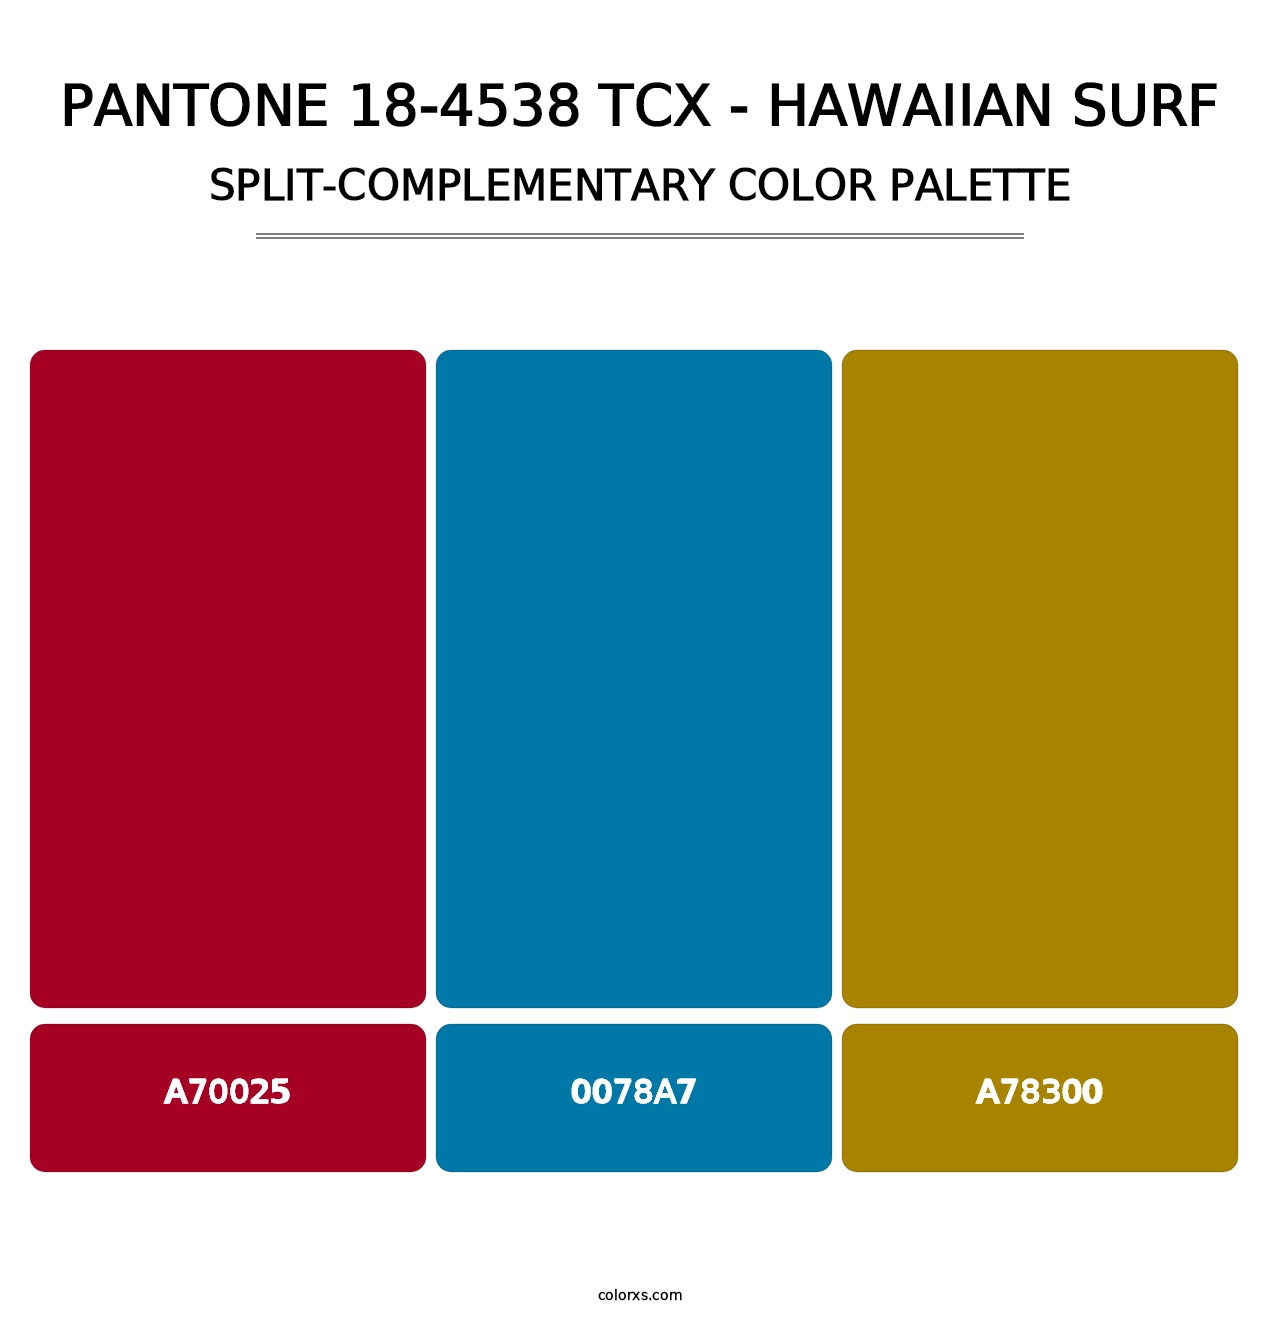 PANTONE 18-4538 TCX - Hawaiian Surf - Split-Complementary Color Palette